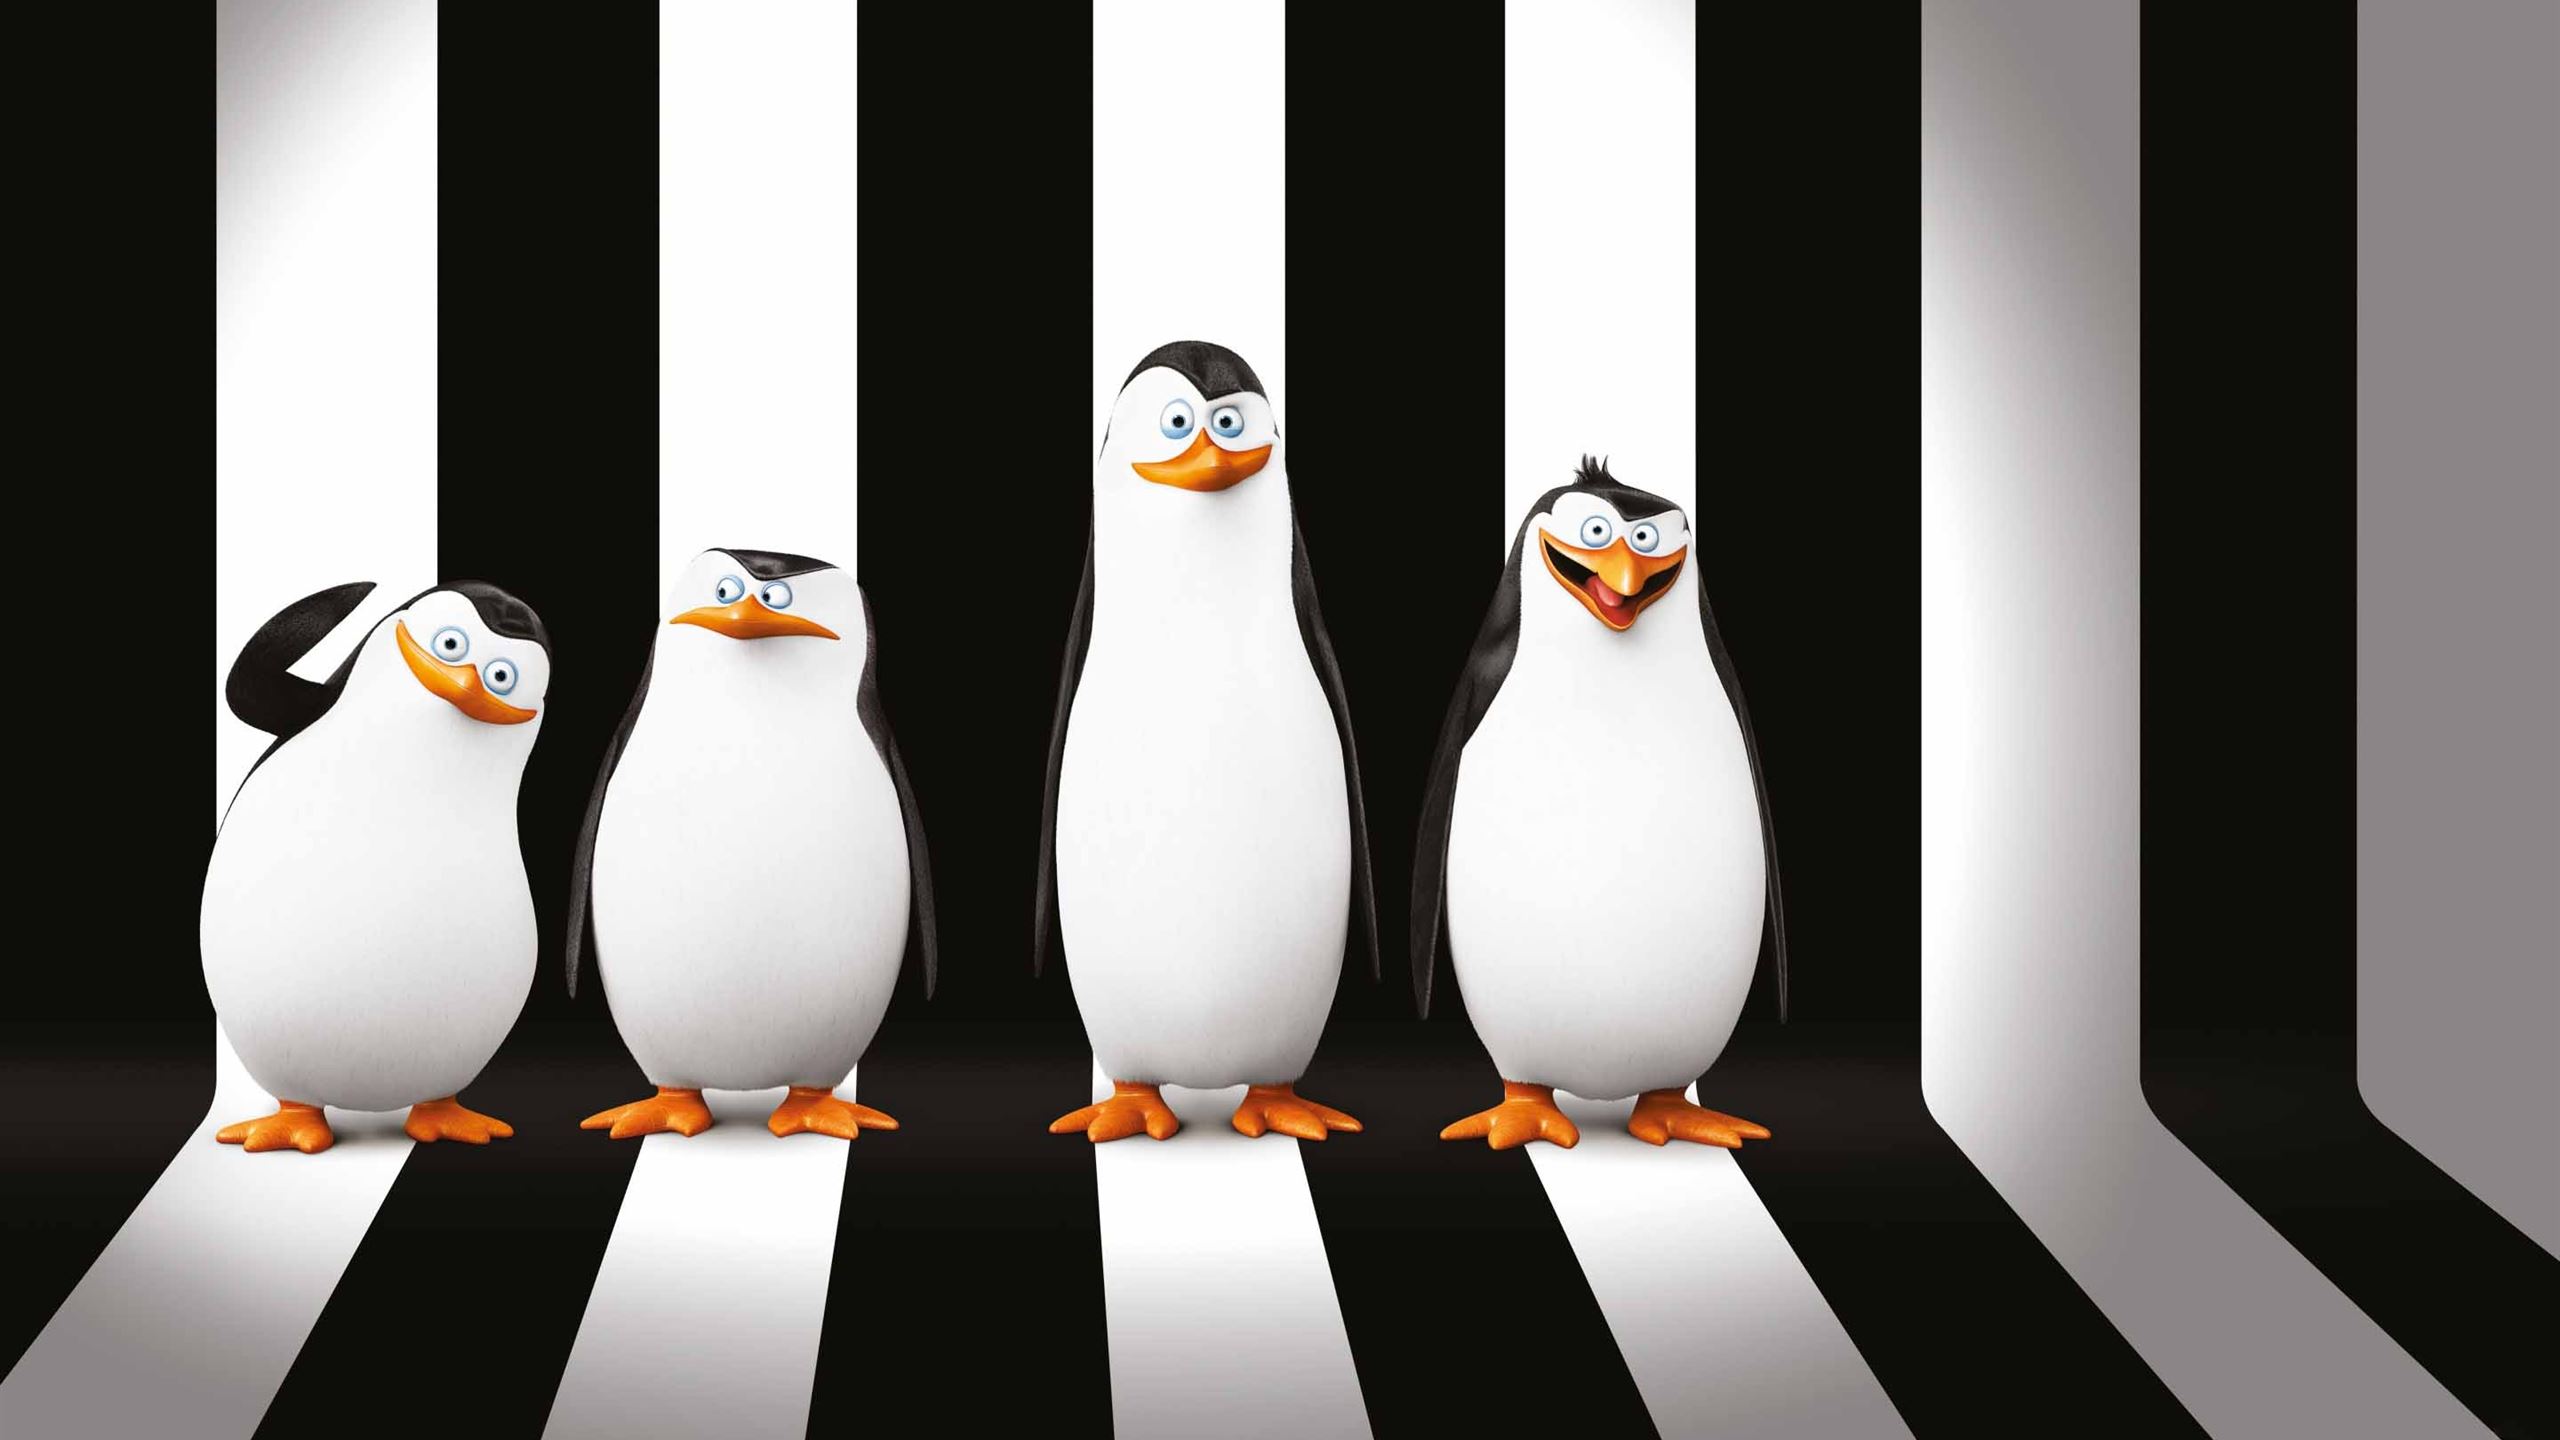 Penguins Of Madagascar Movie Macbook Air Wallpaper Download Images, Photos, Reviews